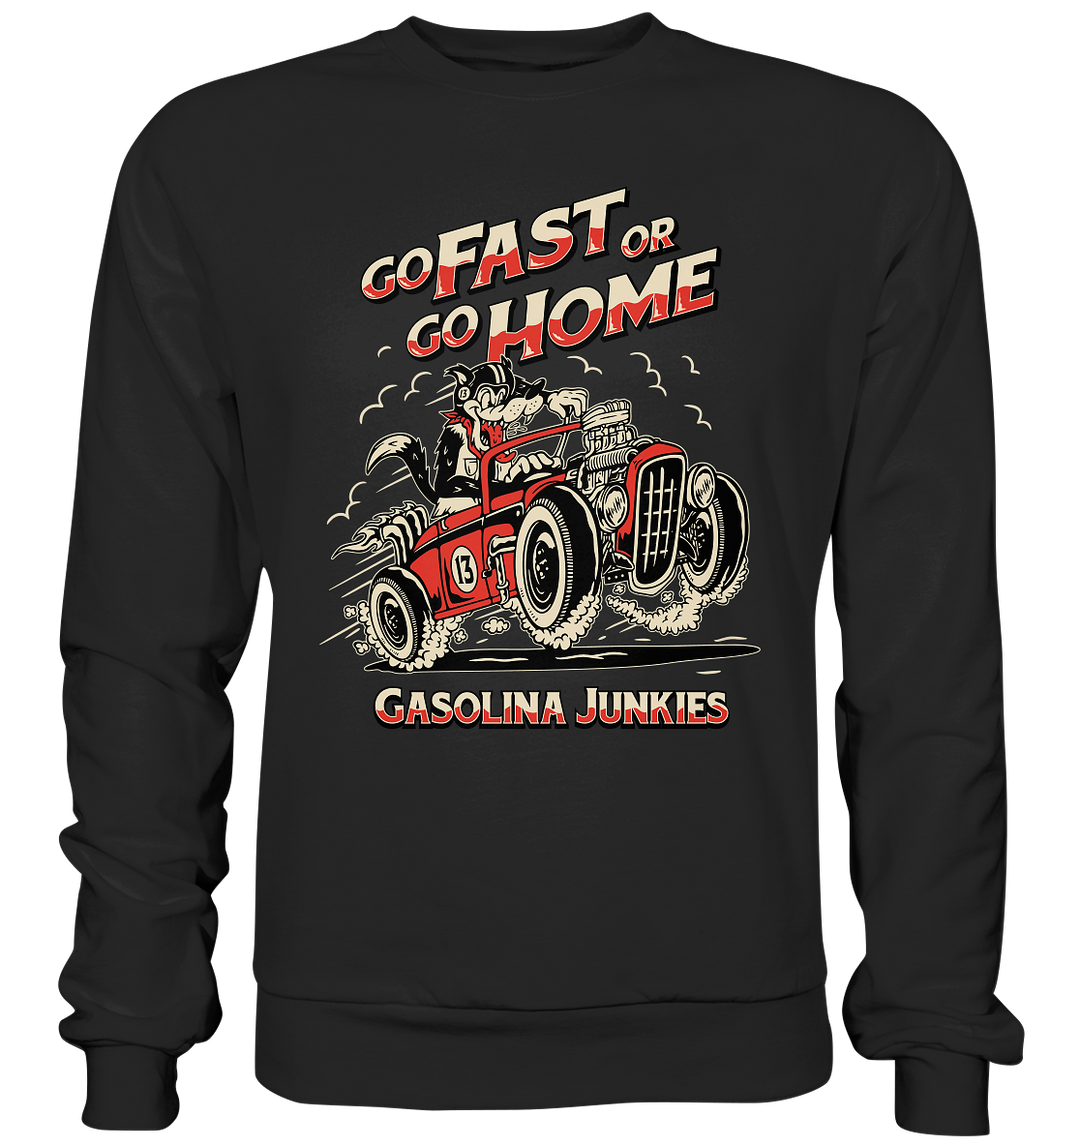 Go fast or go home - Premium Sweatshirt